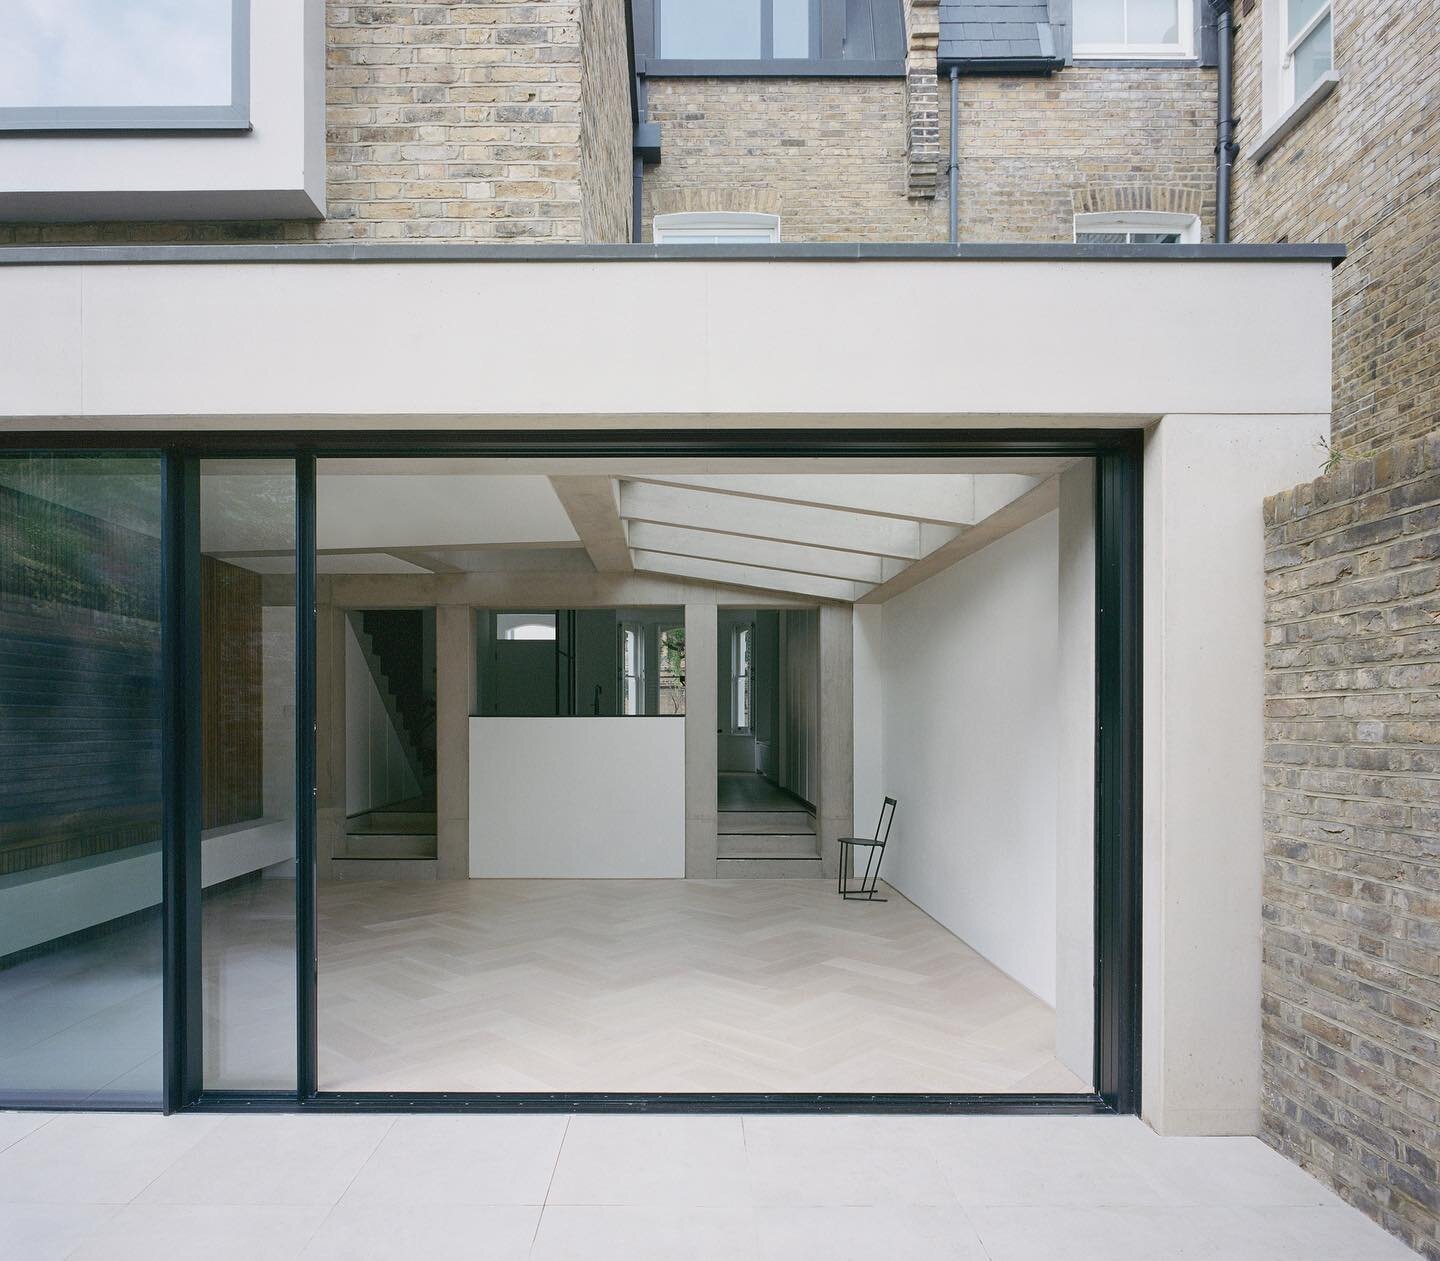 Framework House, London. 

📸 @arorygardiner